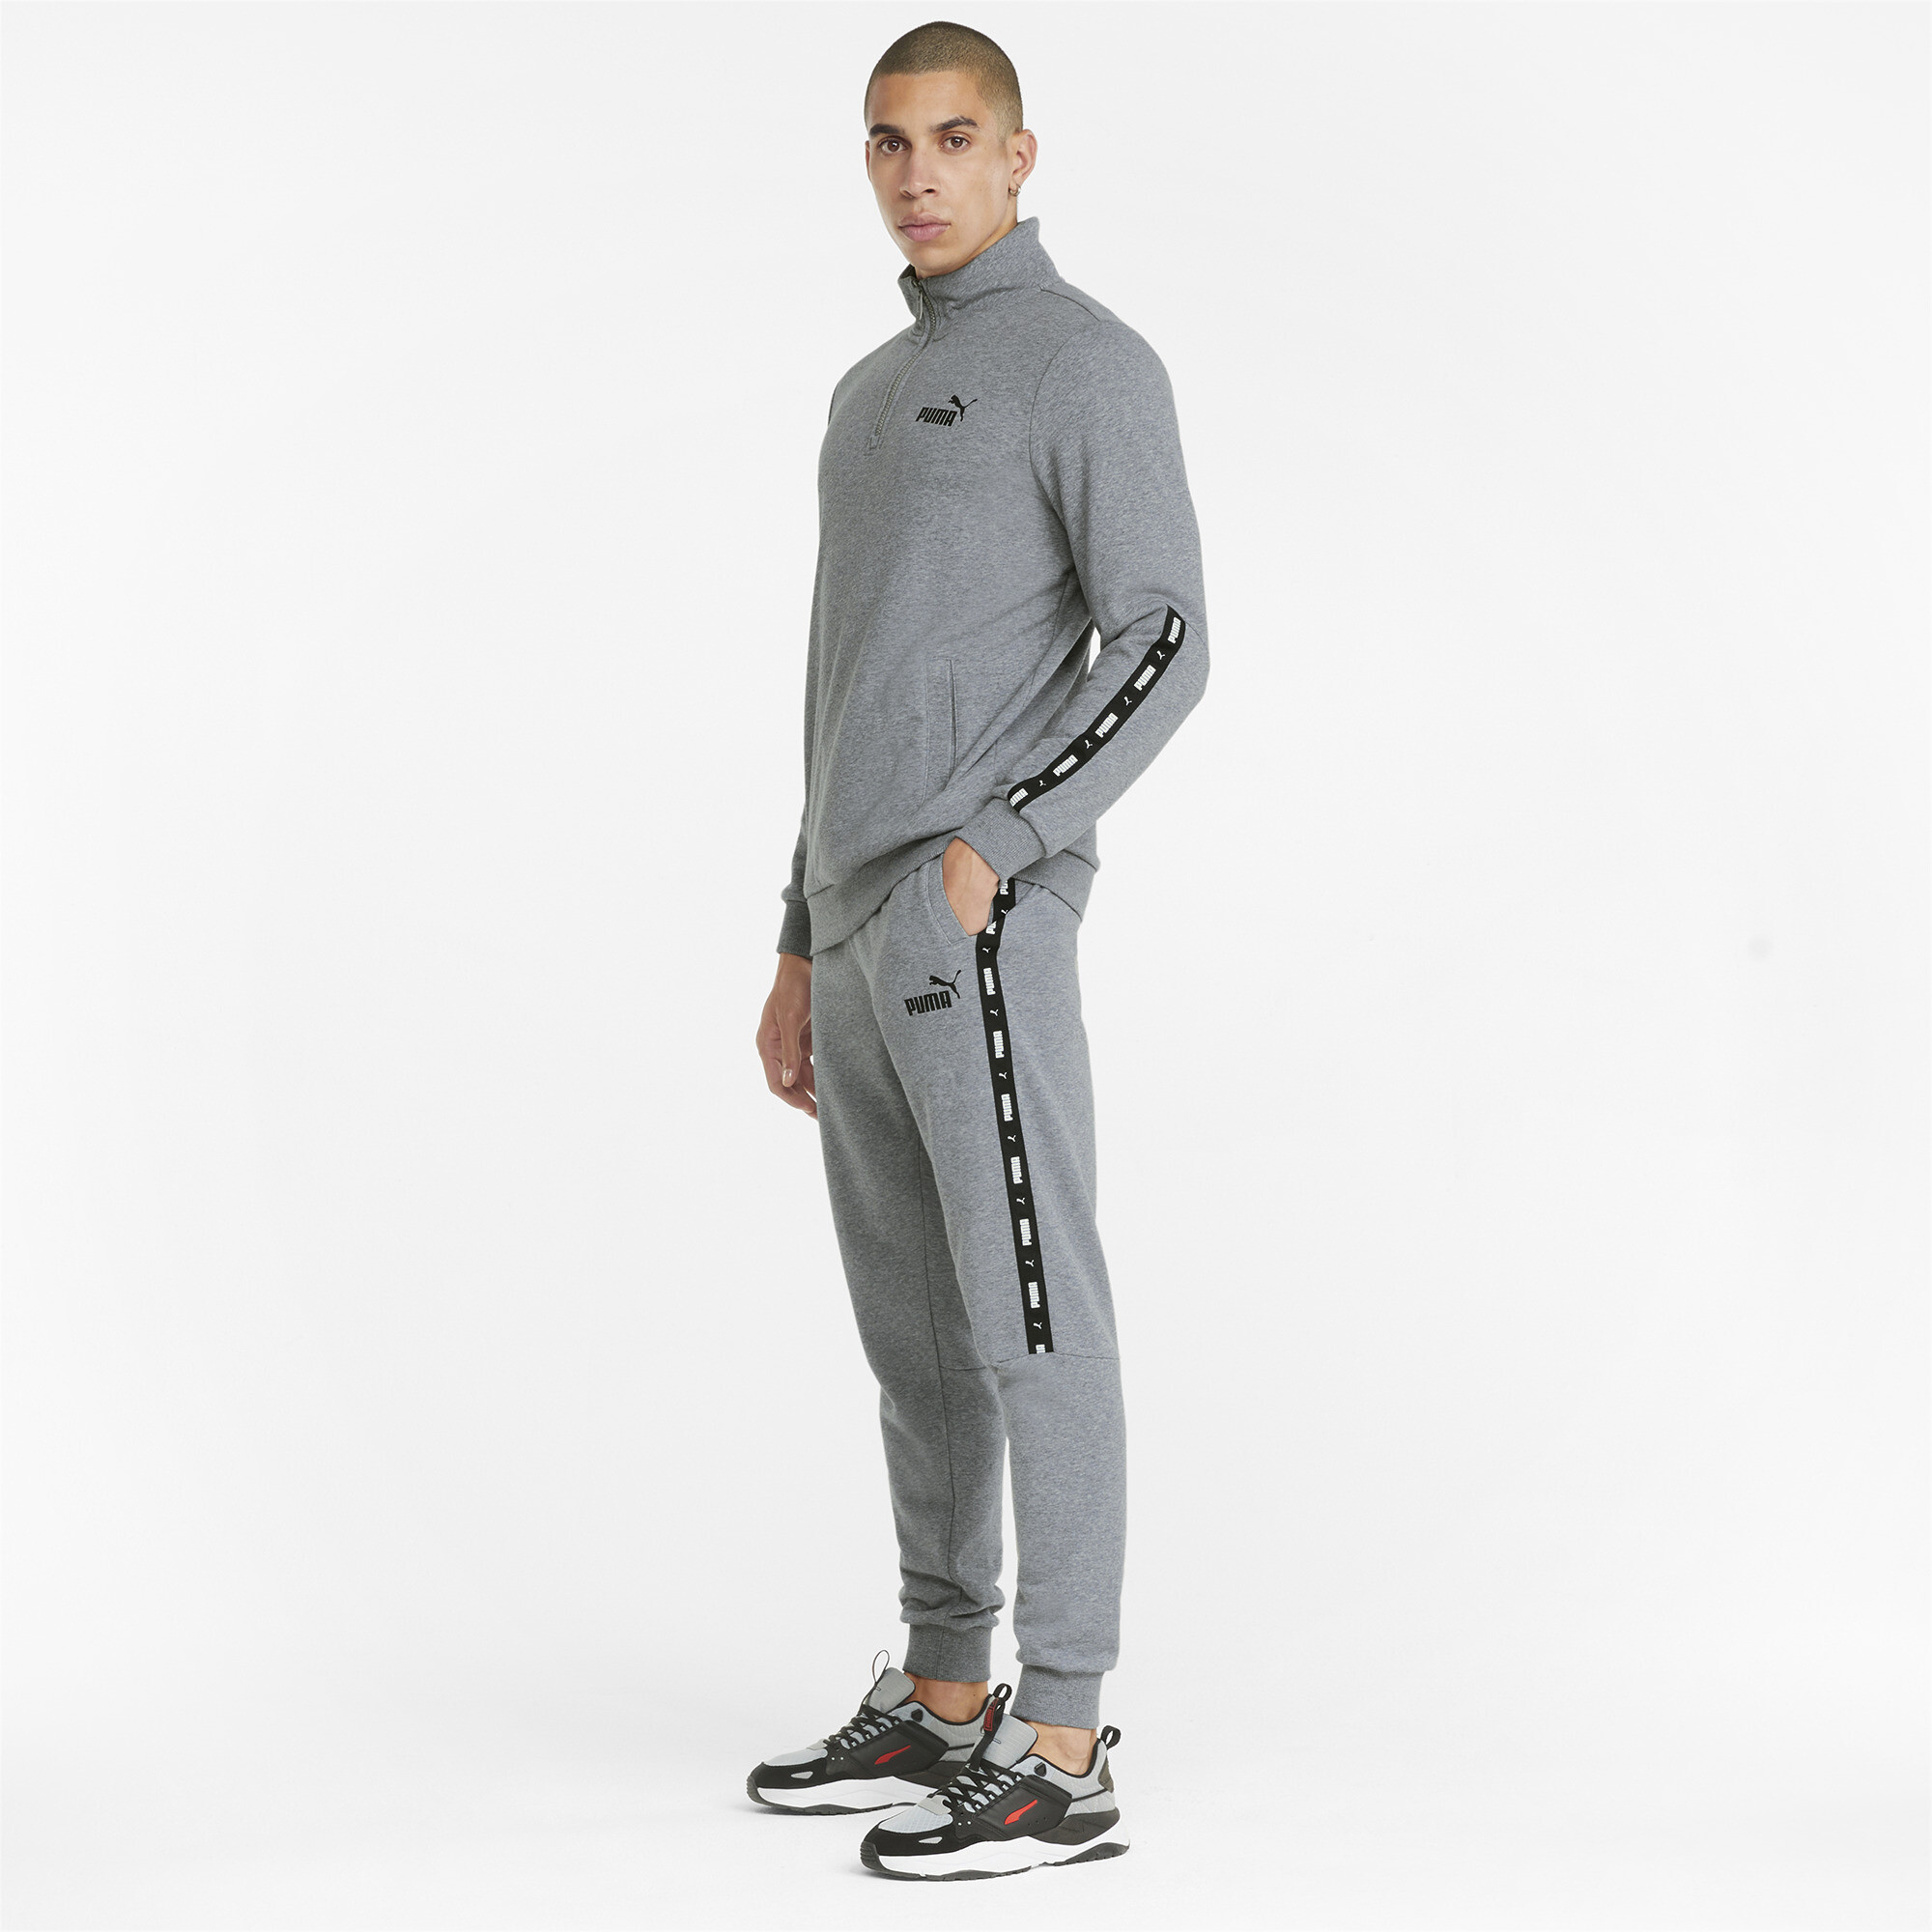 Men's Puma Essentials+ Tape's Sweatpants, Gray, Size S, Clothing